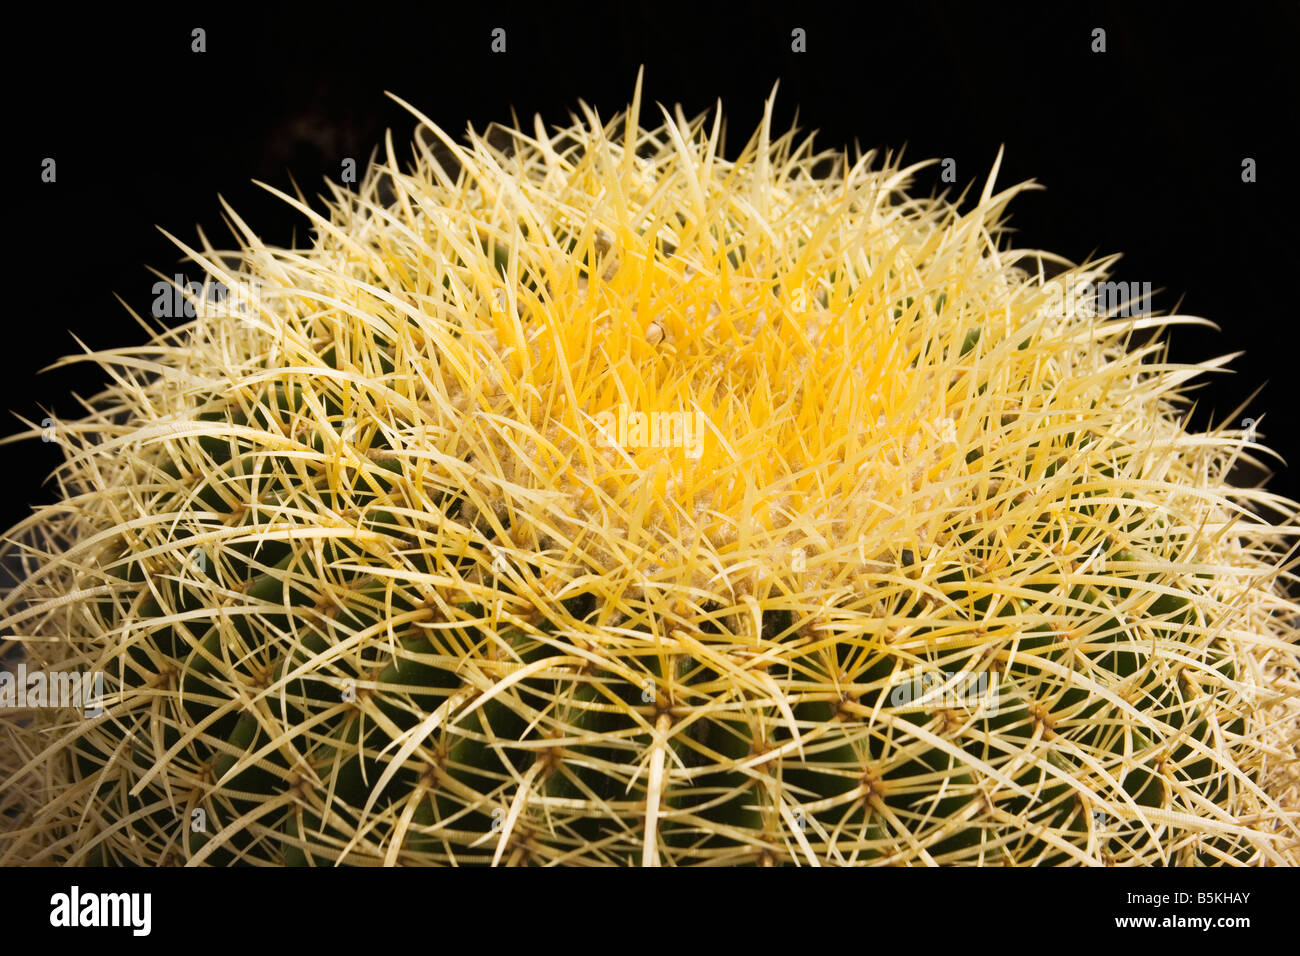 Golden Barrel Cactus close up detail Banque D'Images